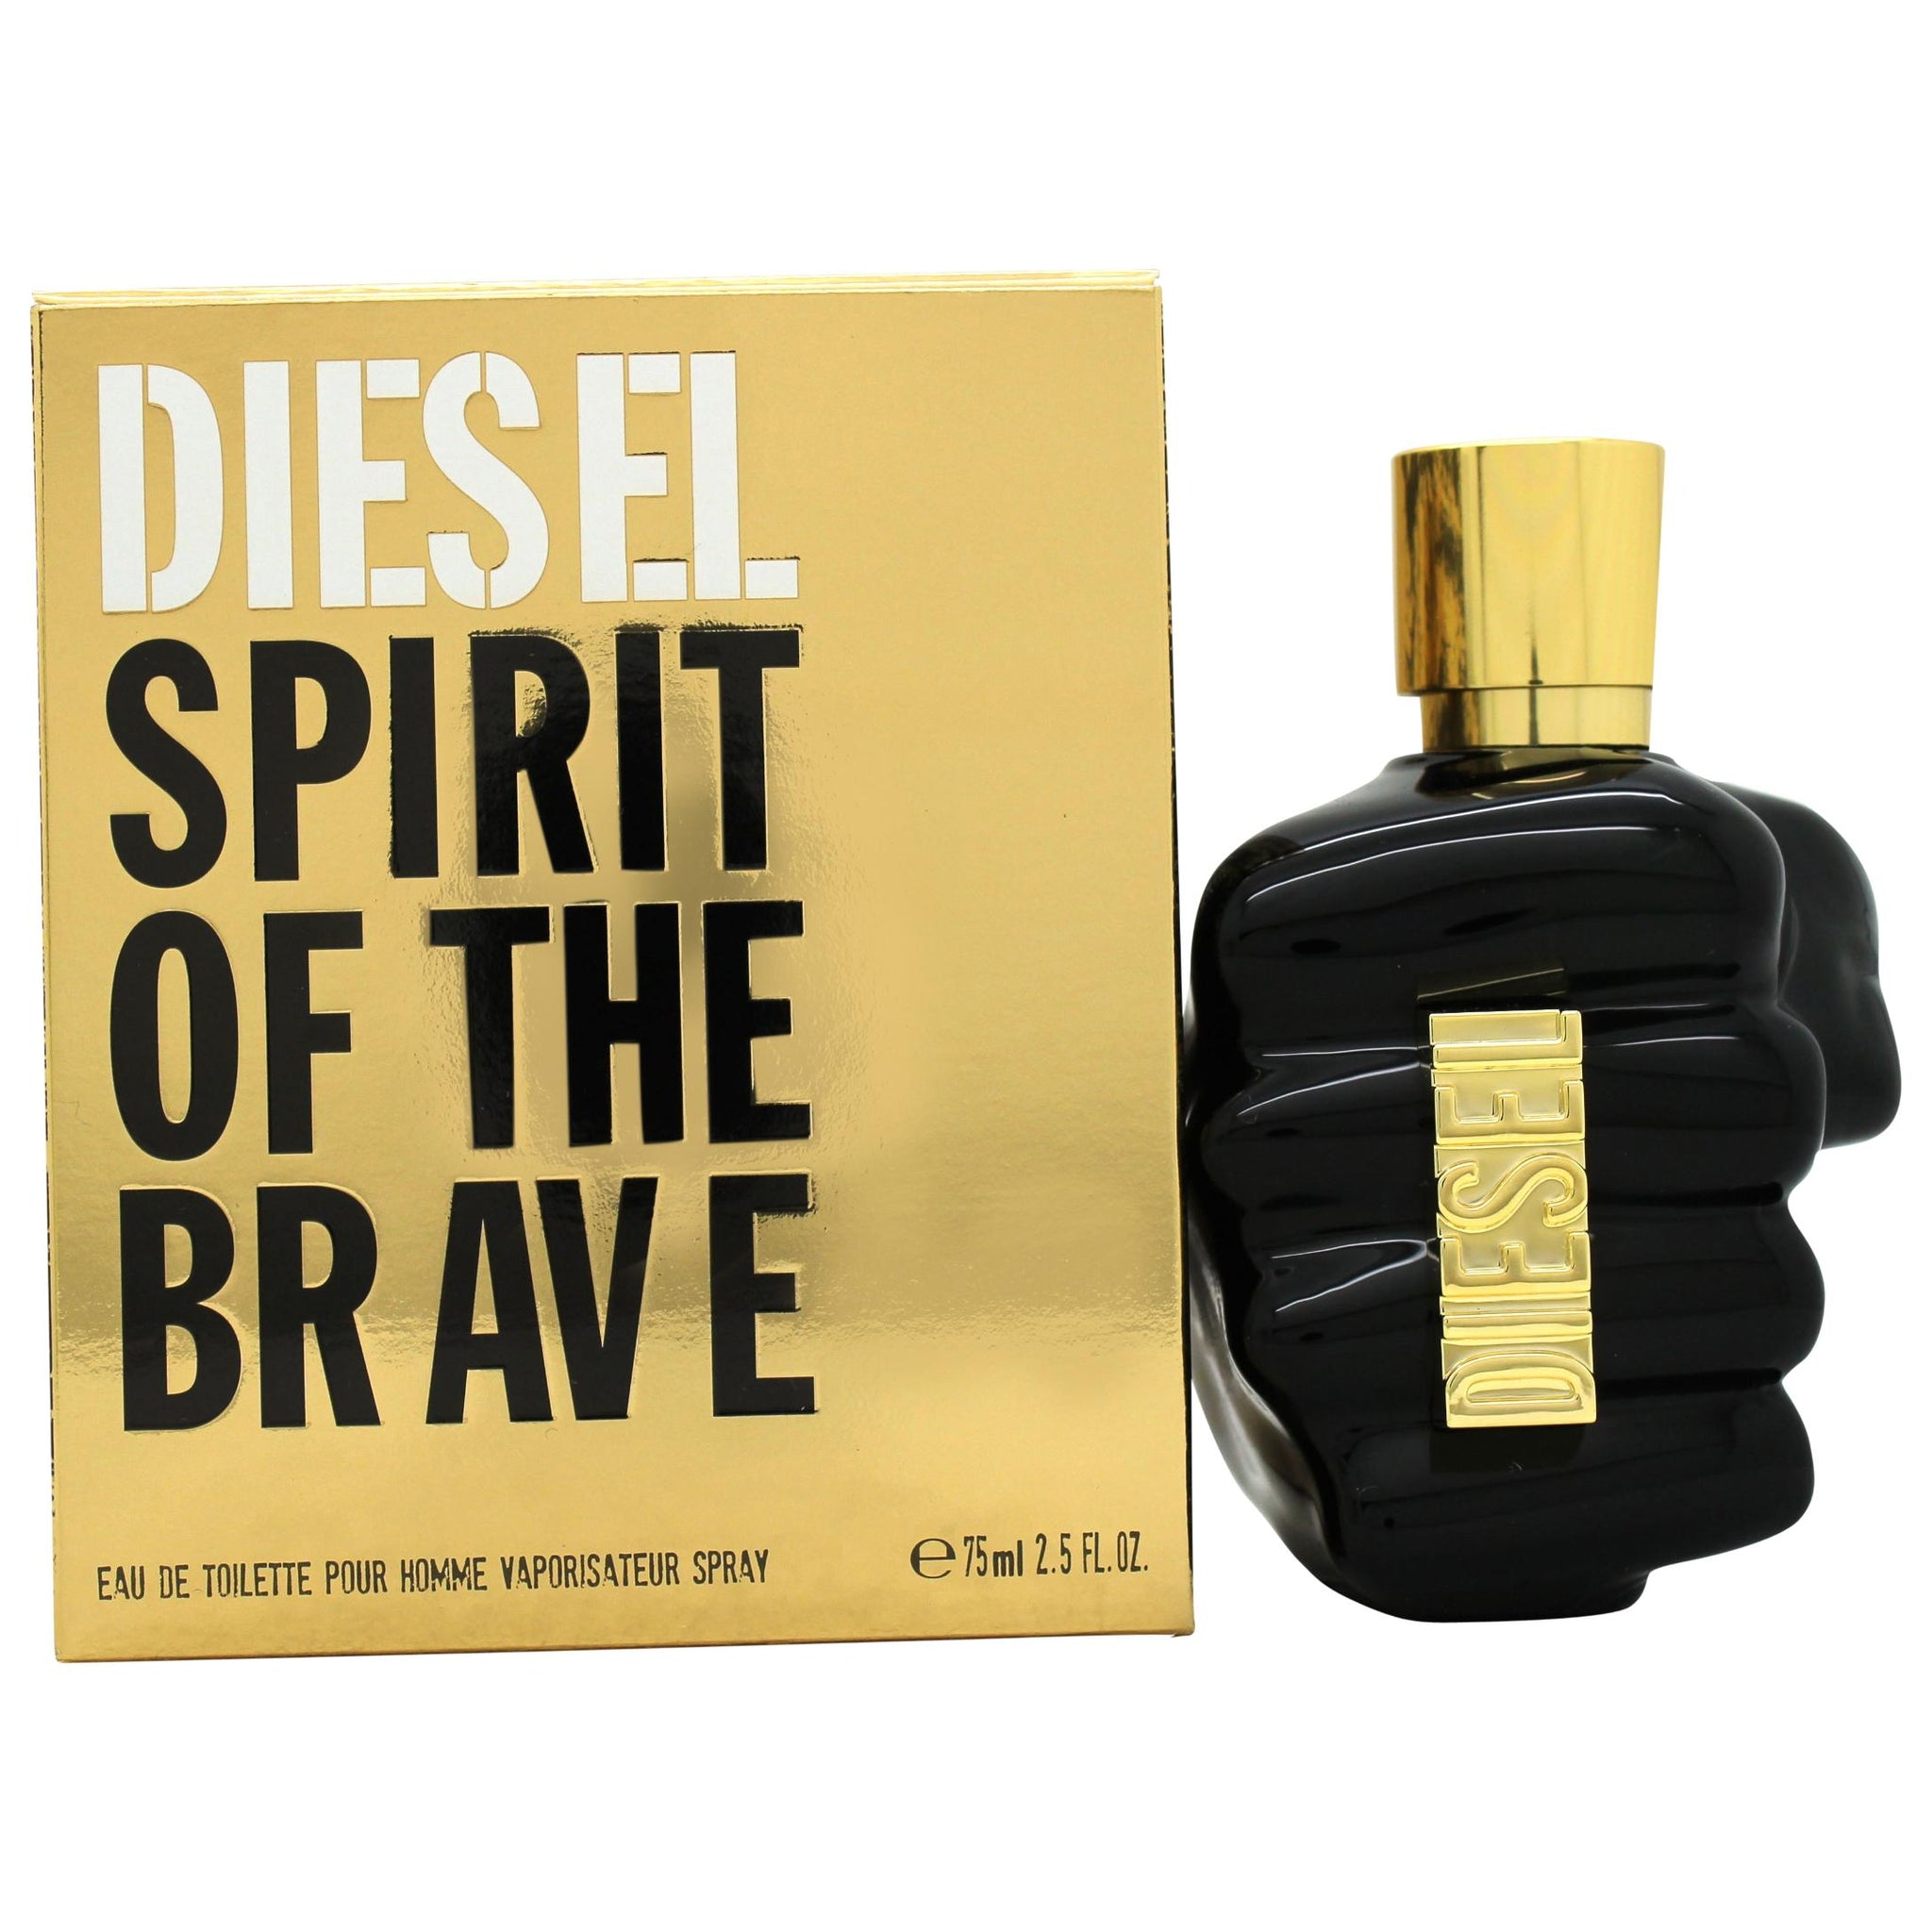 Diesel Spirit of the Brave Eau de Toilette 75ml Spray